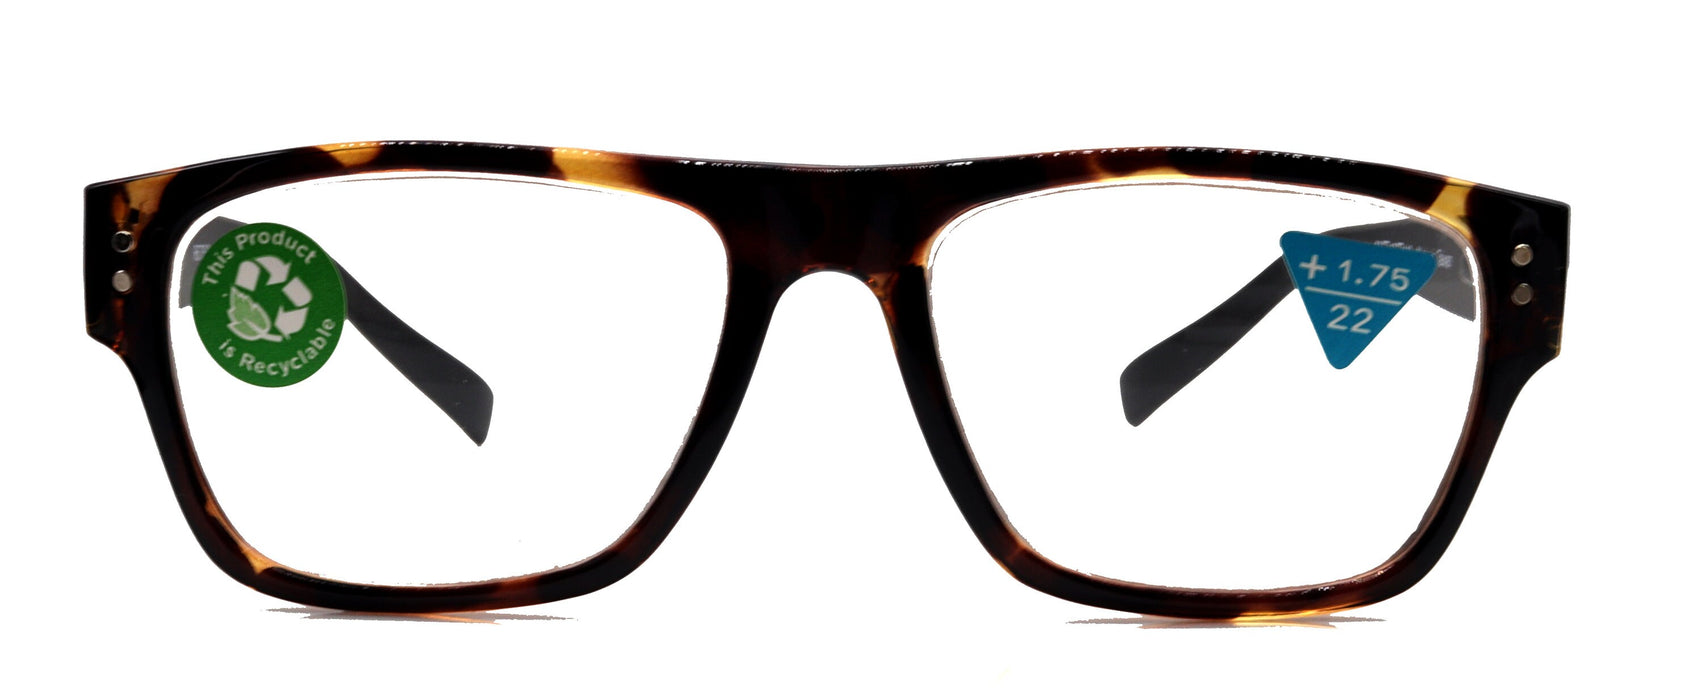 Brooklyn, (Premium) Reading Glasses, High End Reader +1.25...+3 Magnifying Eyeglasses (Tortoise Black, Brown) Square Frame. NY Fifth Avenue